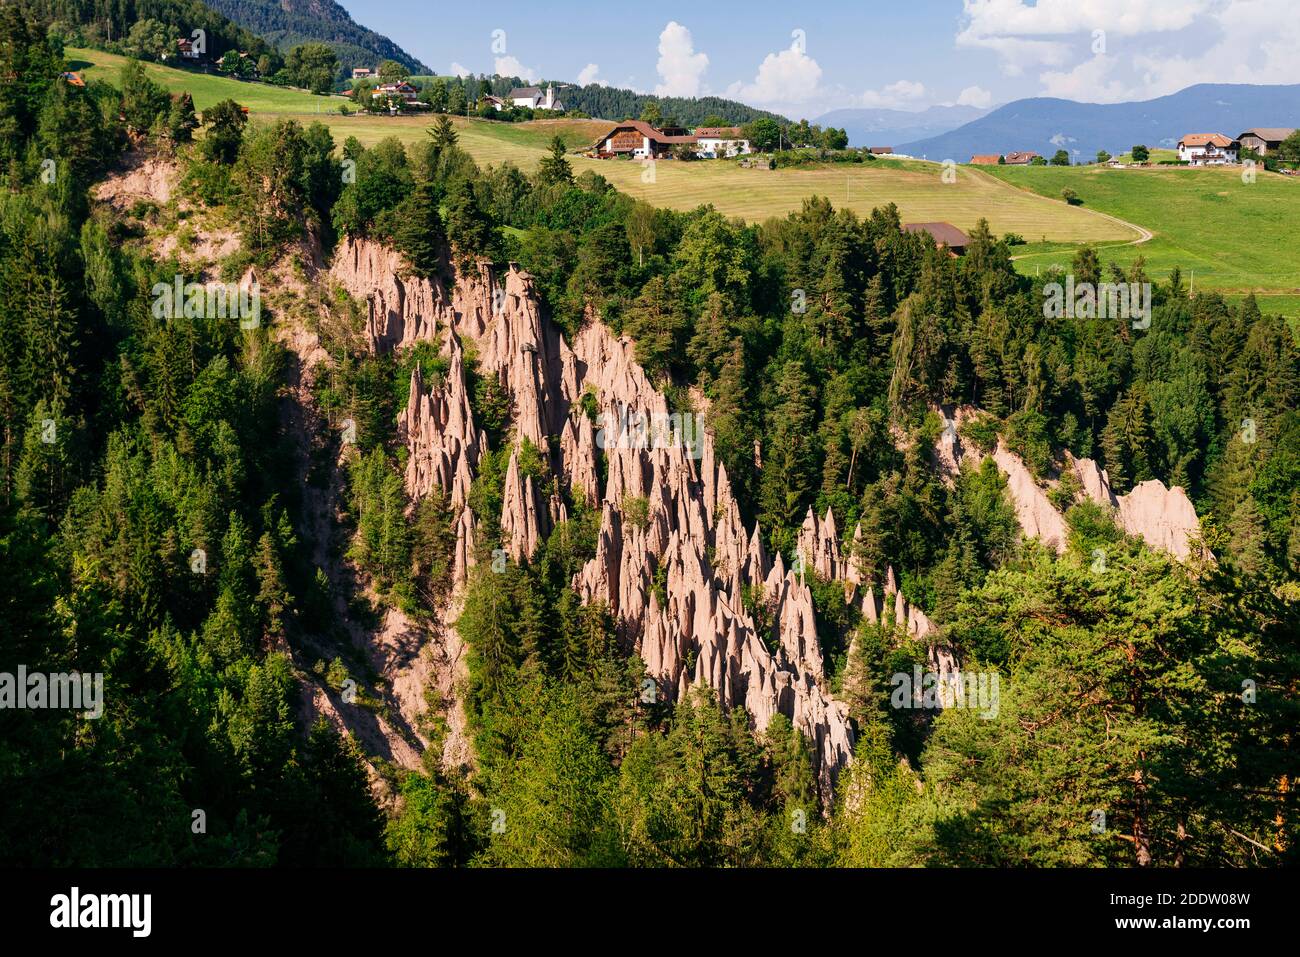 Earth pyramids of Ritten, Longomoso, Renon - Ritten region, South Tyrol, Italy, Europe Stock Photo